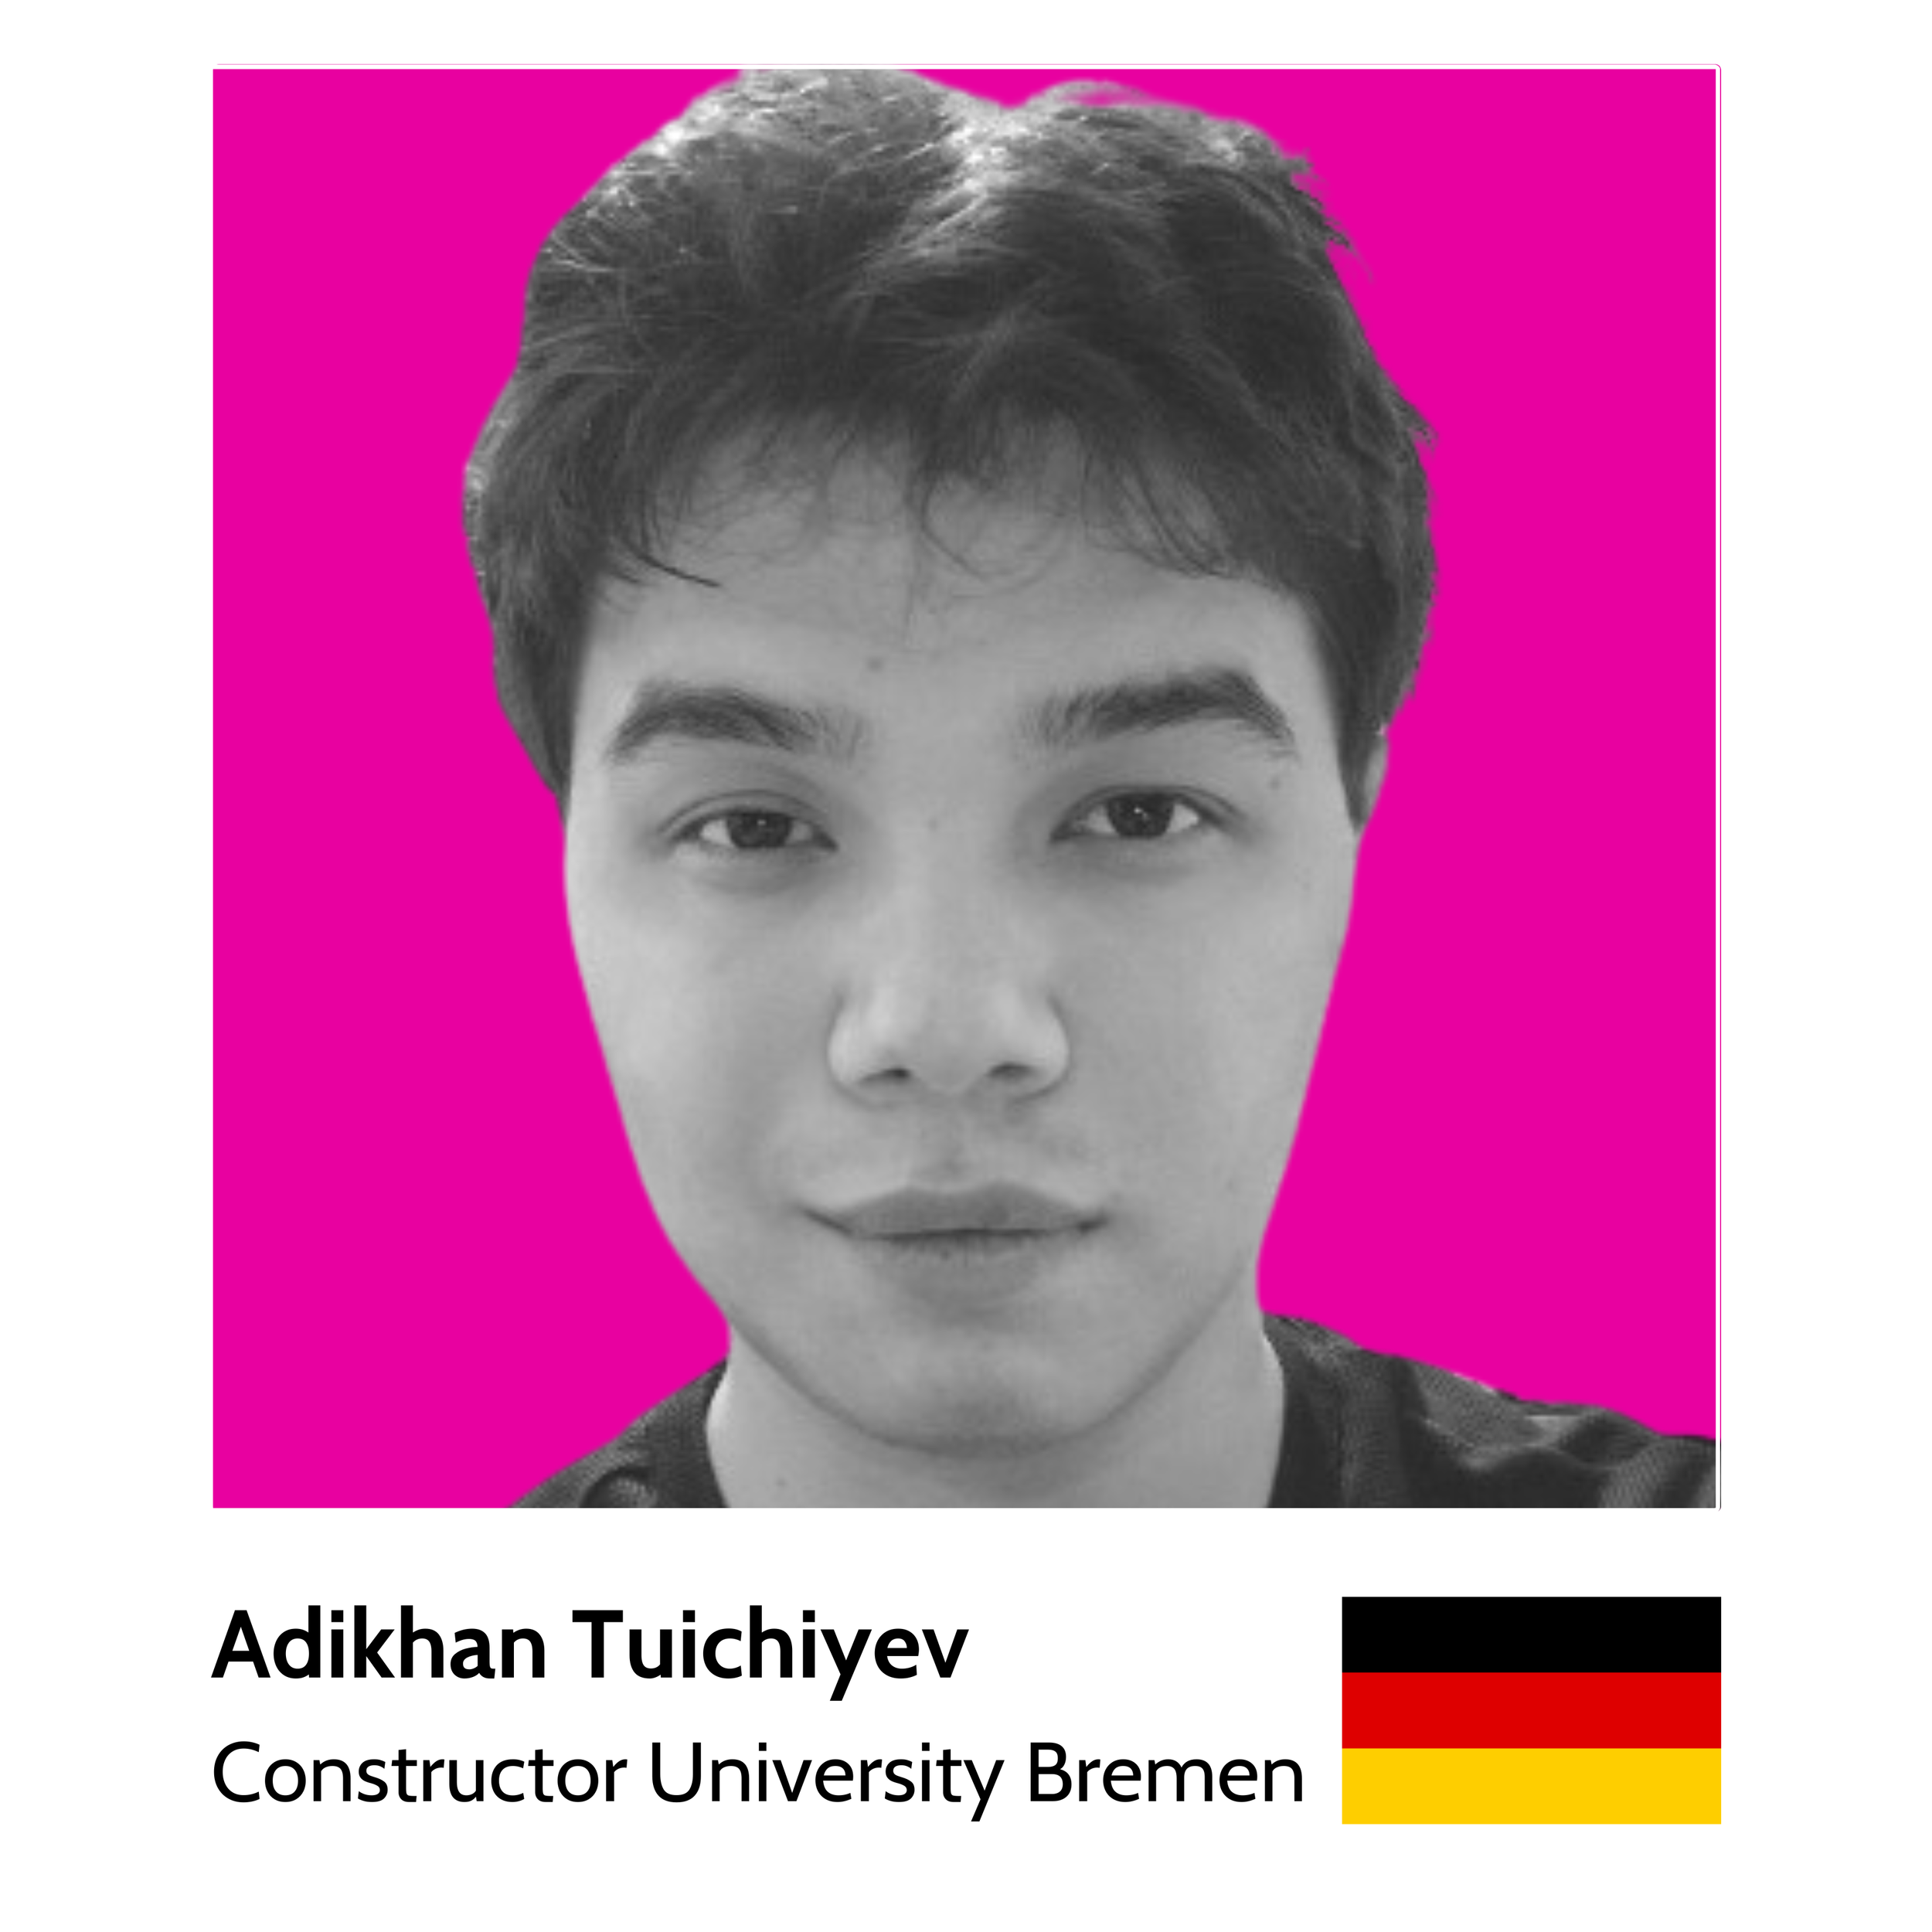 Your_Big_Year_ibm_z_student_ambassador_Adikhan_Tuichiyev_Constructor_University_Bremen.png